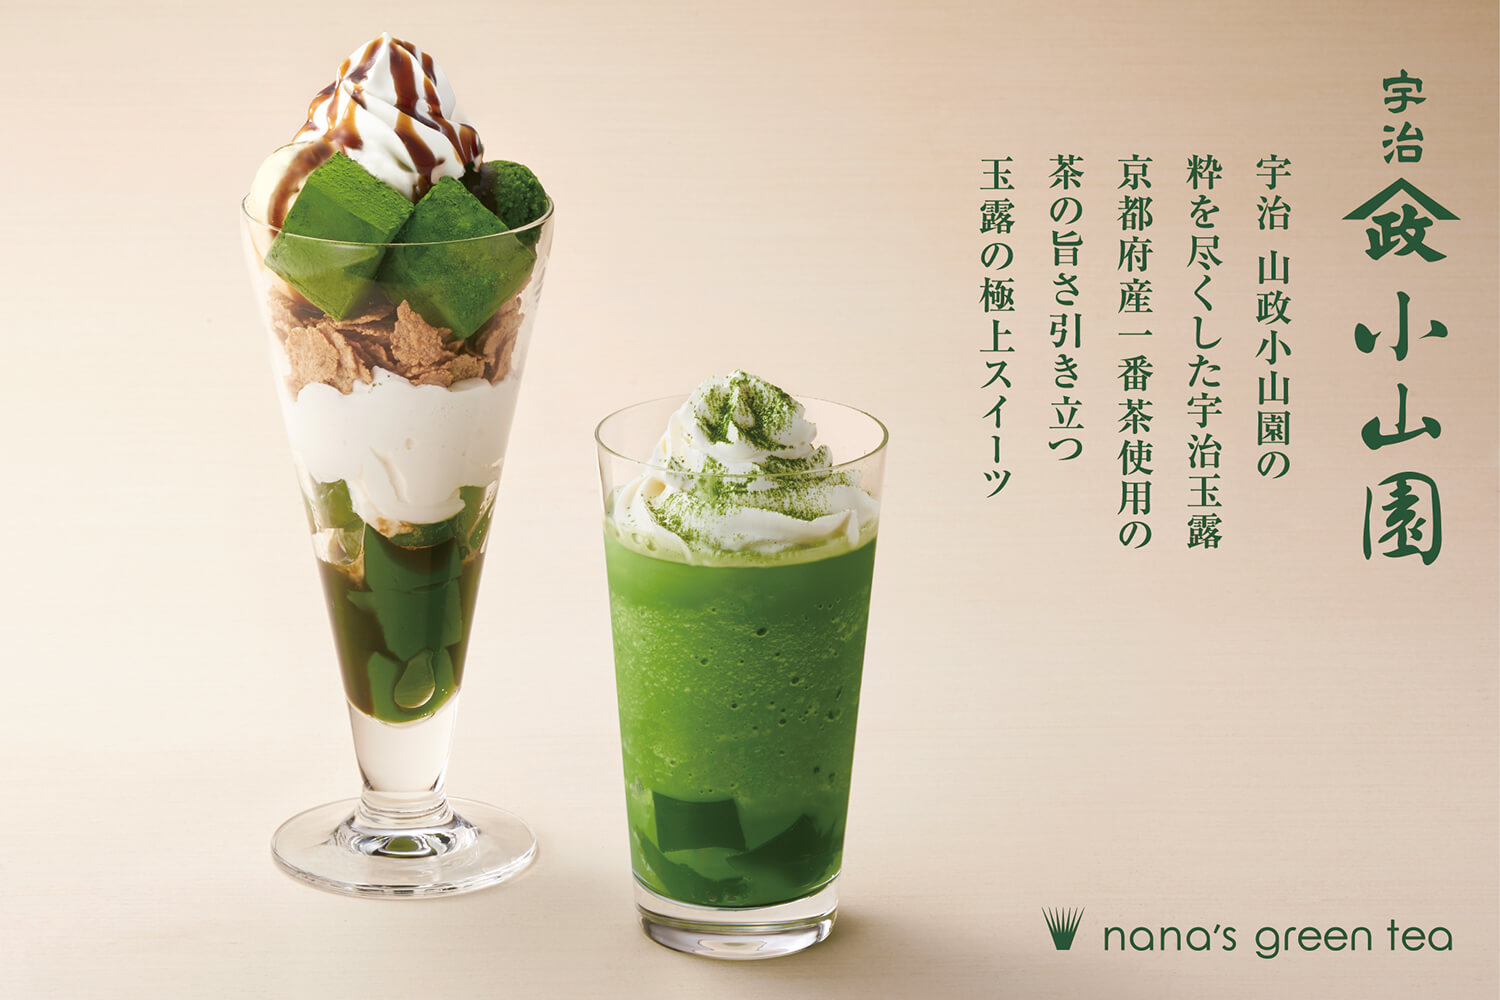 nanas-green-tea-dessert-%e5%92%8c%e3%82%b9%e3%82%a4%e3%83%bc%e3%83%84-%e7%94%9c%e9%bb%9e-2